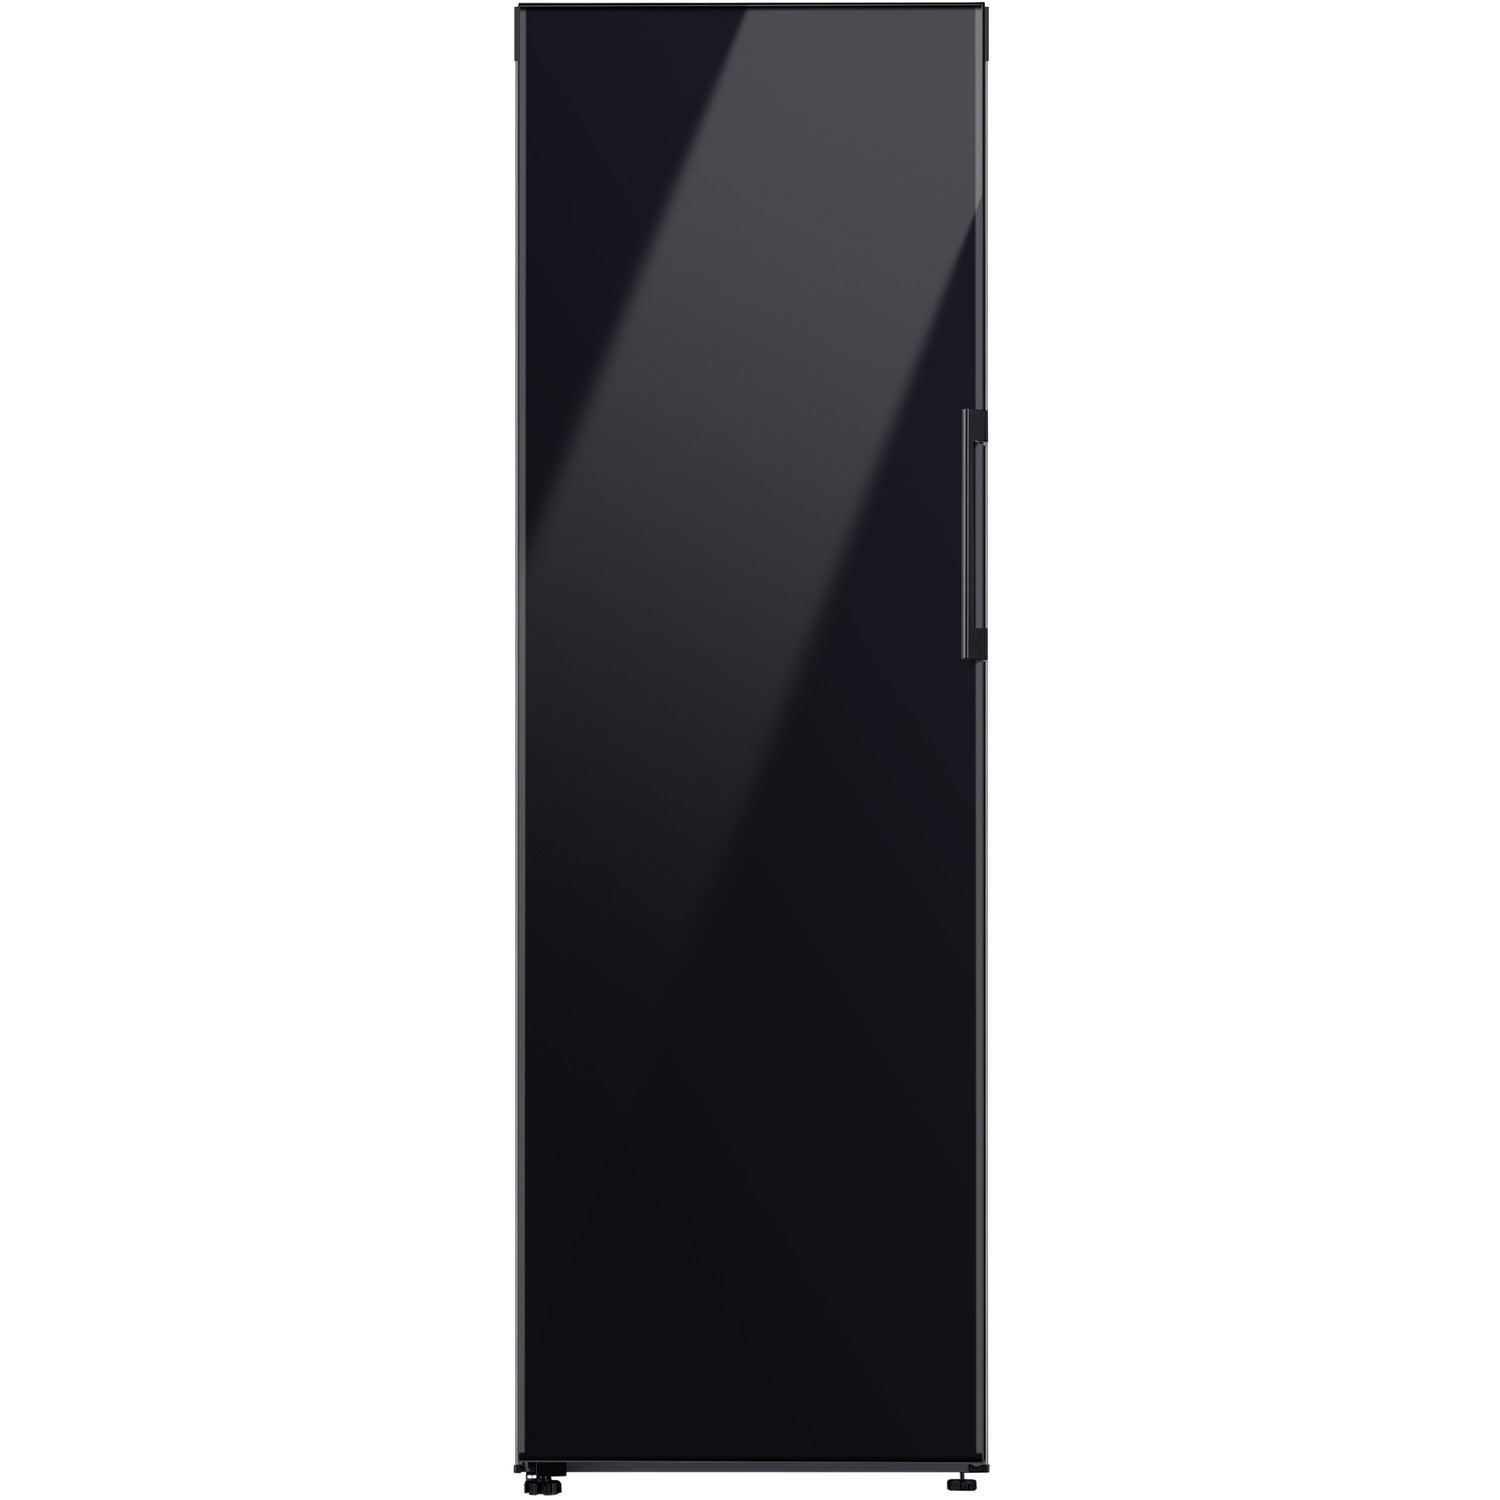 Samsung Bespoke Upright Total No Frost Freestanding Freezer - Clean Black